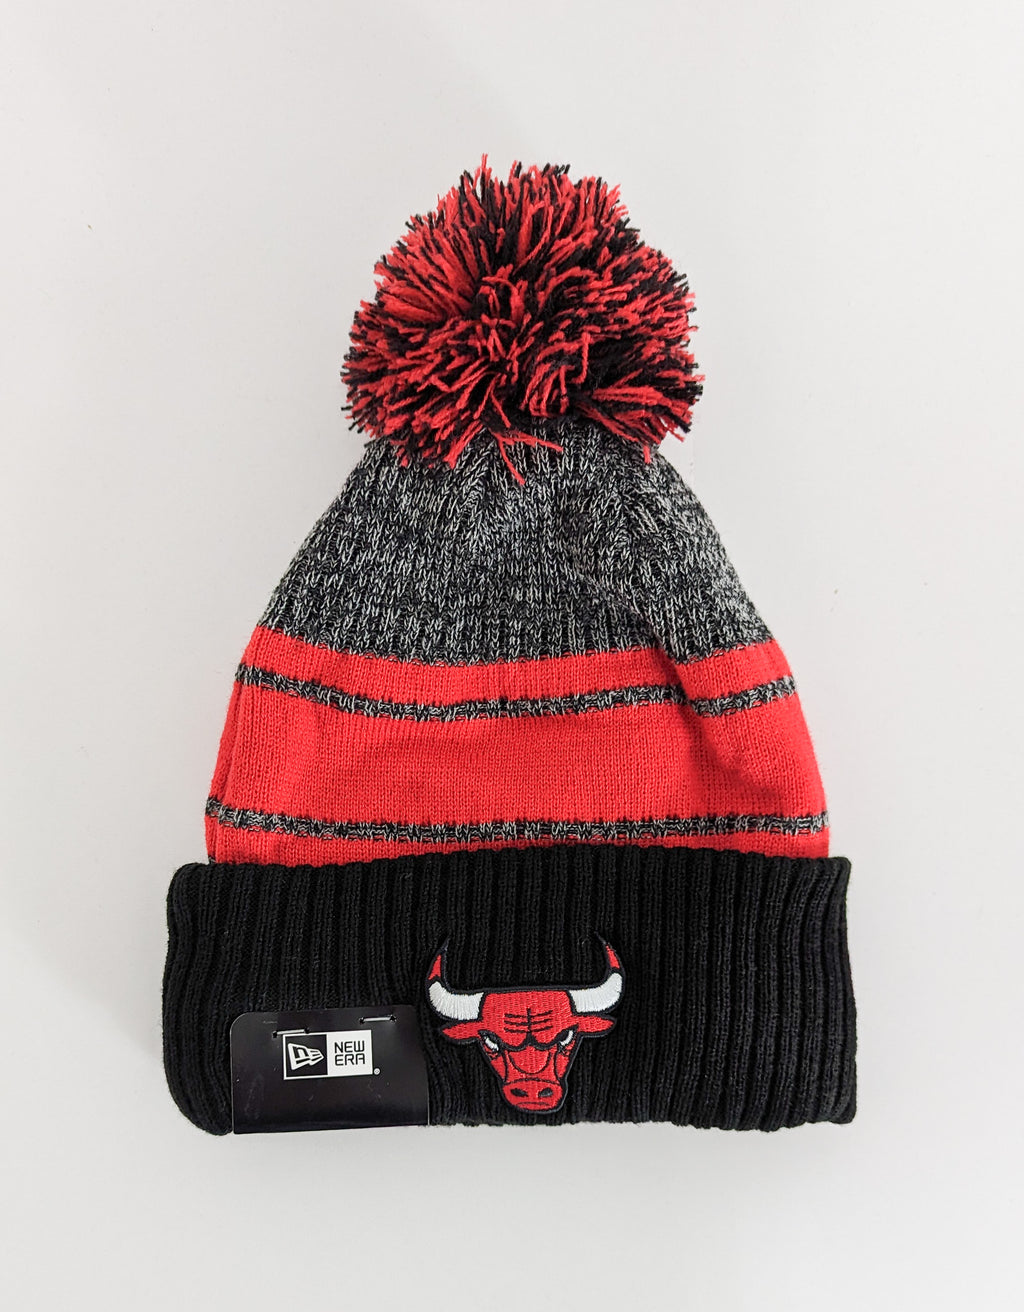 New Era NBa Chicago Bulls Pom Knit Beanie Black/ Red